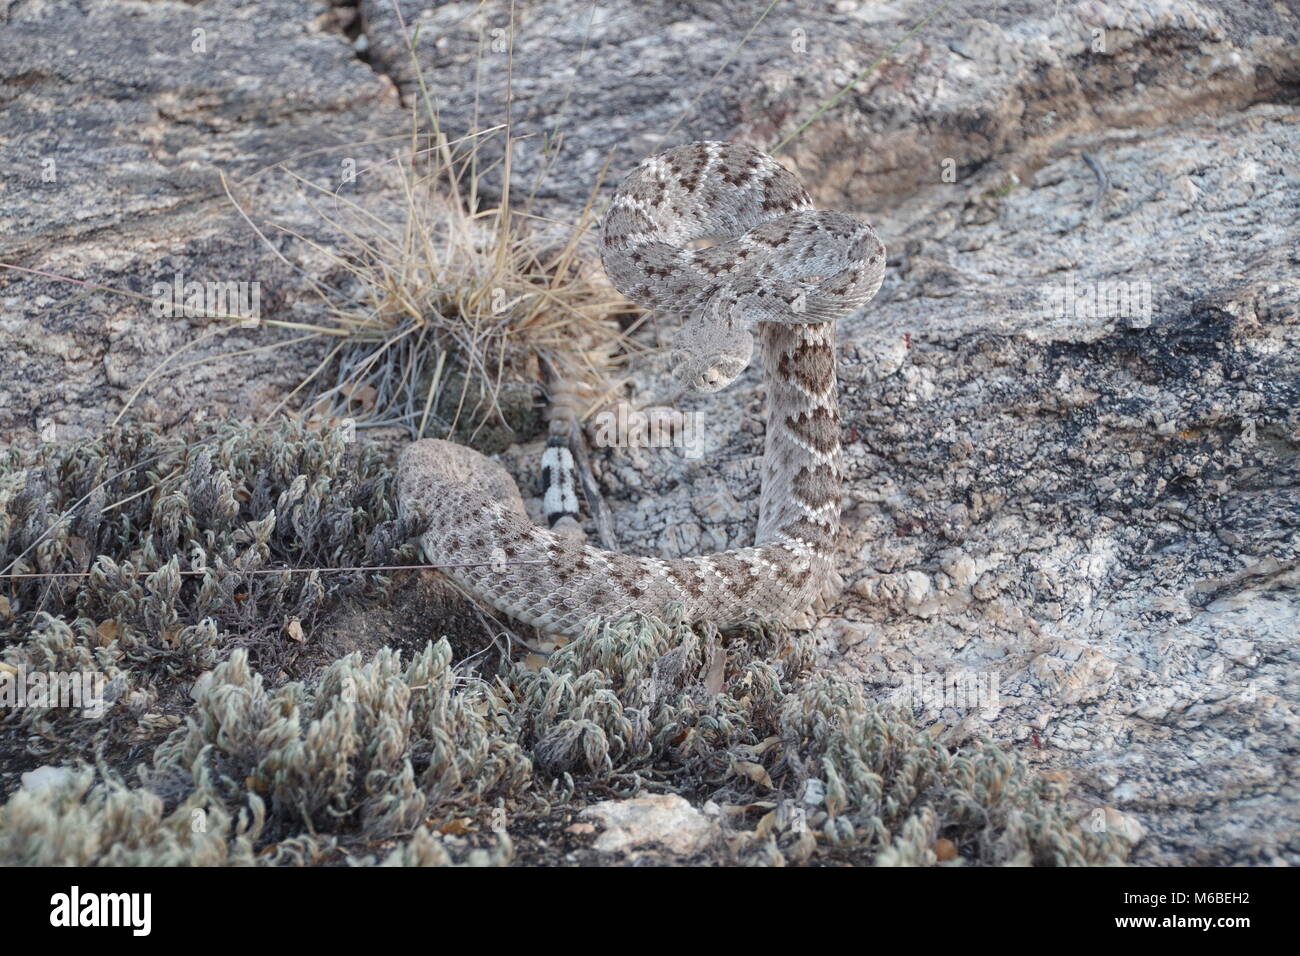 Western Diamondback Rattlesnake coiled and ready to strike. Stock Photo